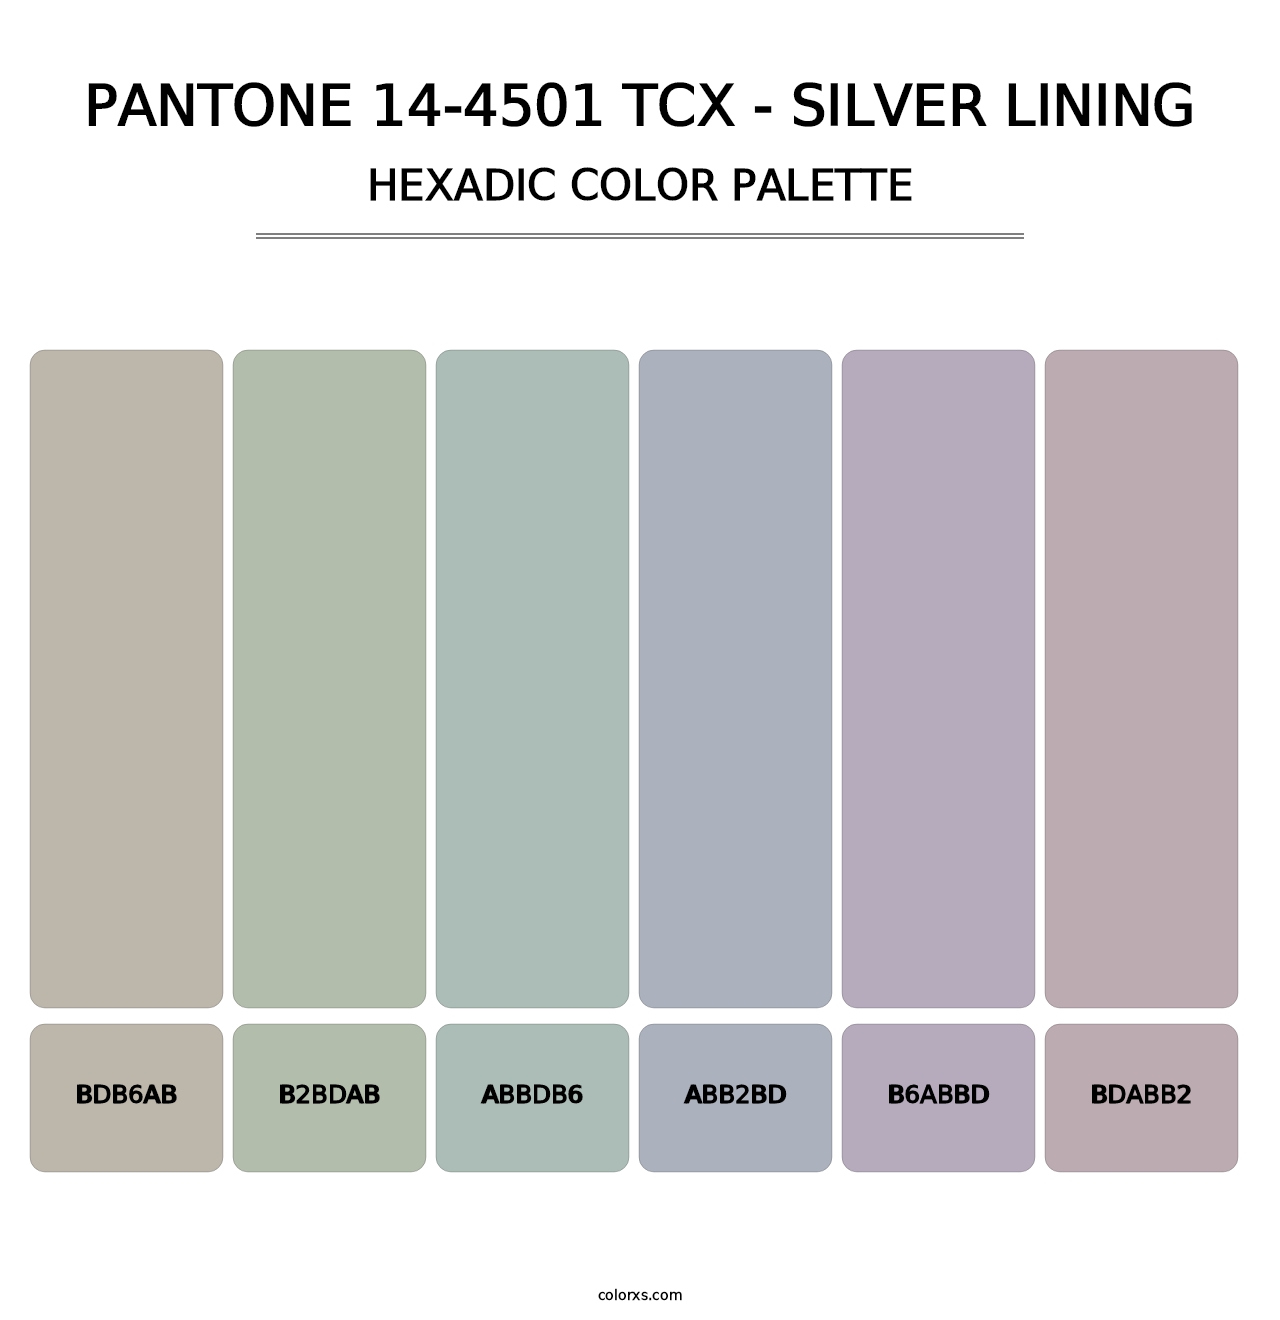 PANTONE 14-4501 TCX - Silver Lining - Hexadic Color Palette